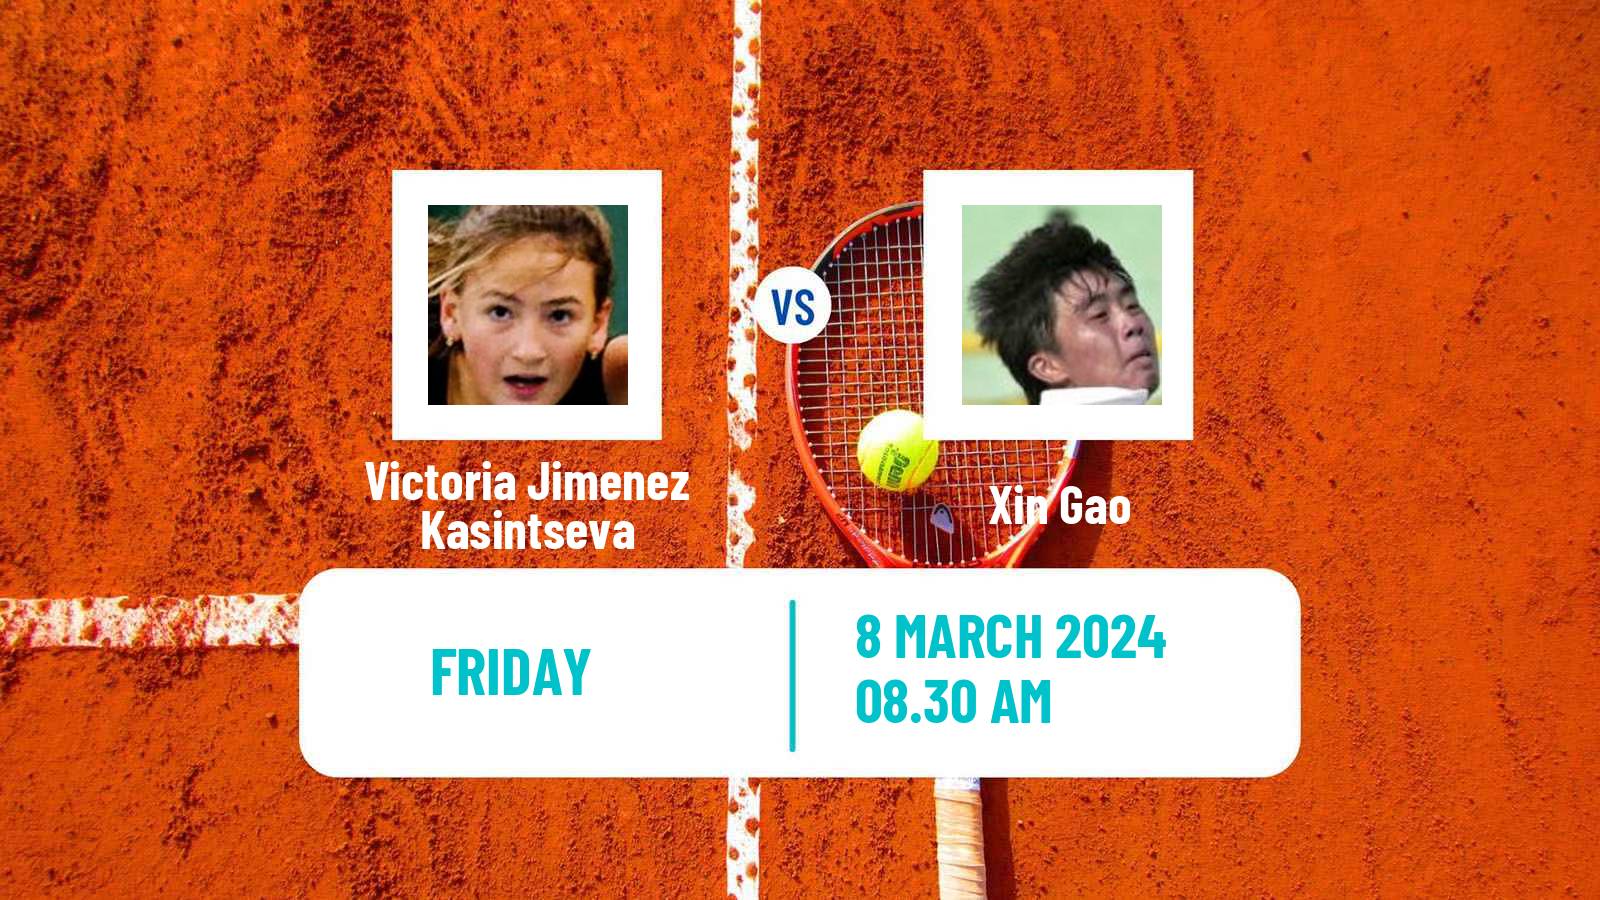 Tennis ITF W35 Santo Domingo Women Victoria Jimenez Kasintseva - Xin Gao